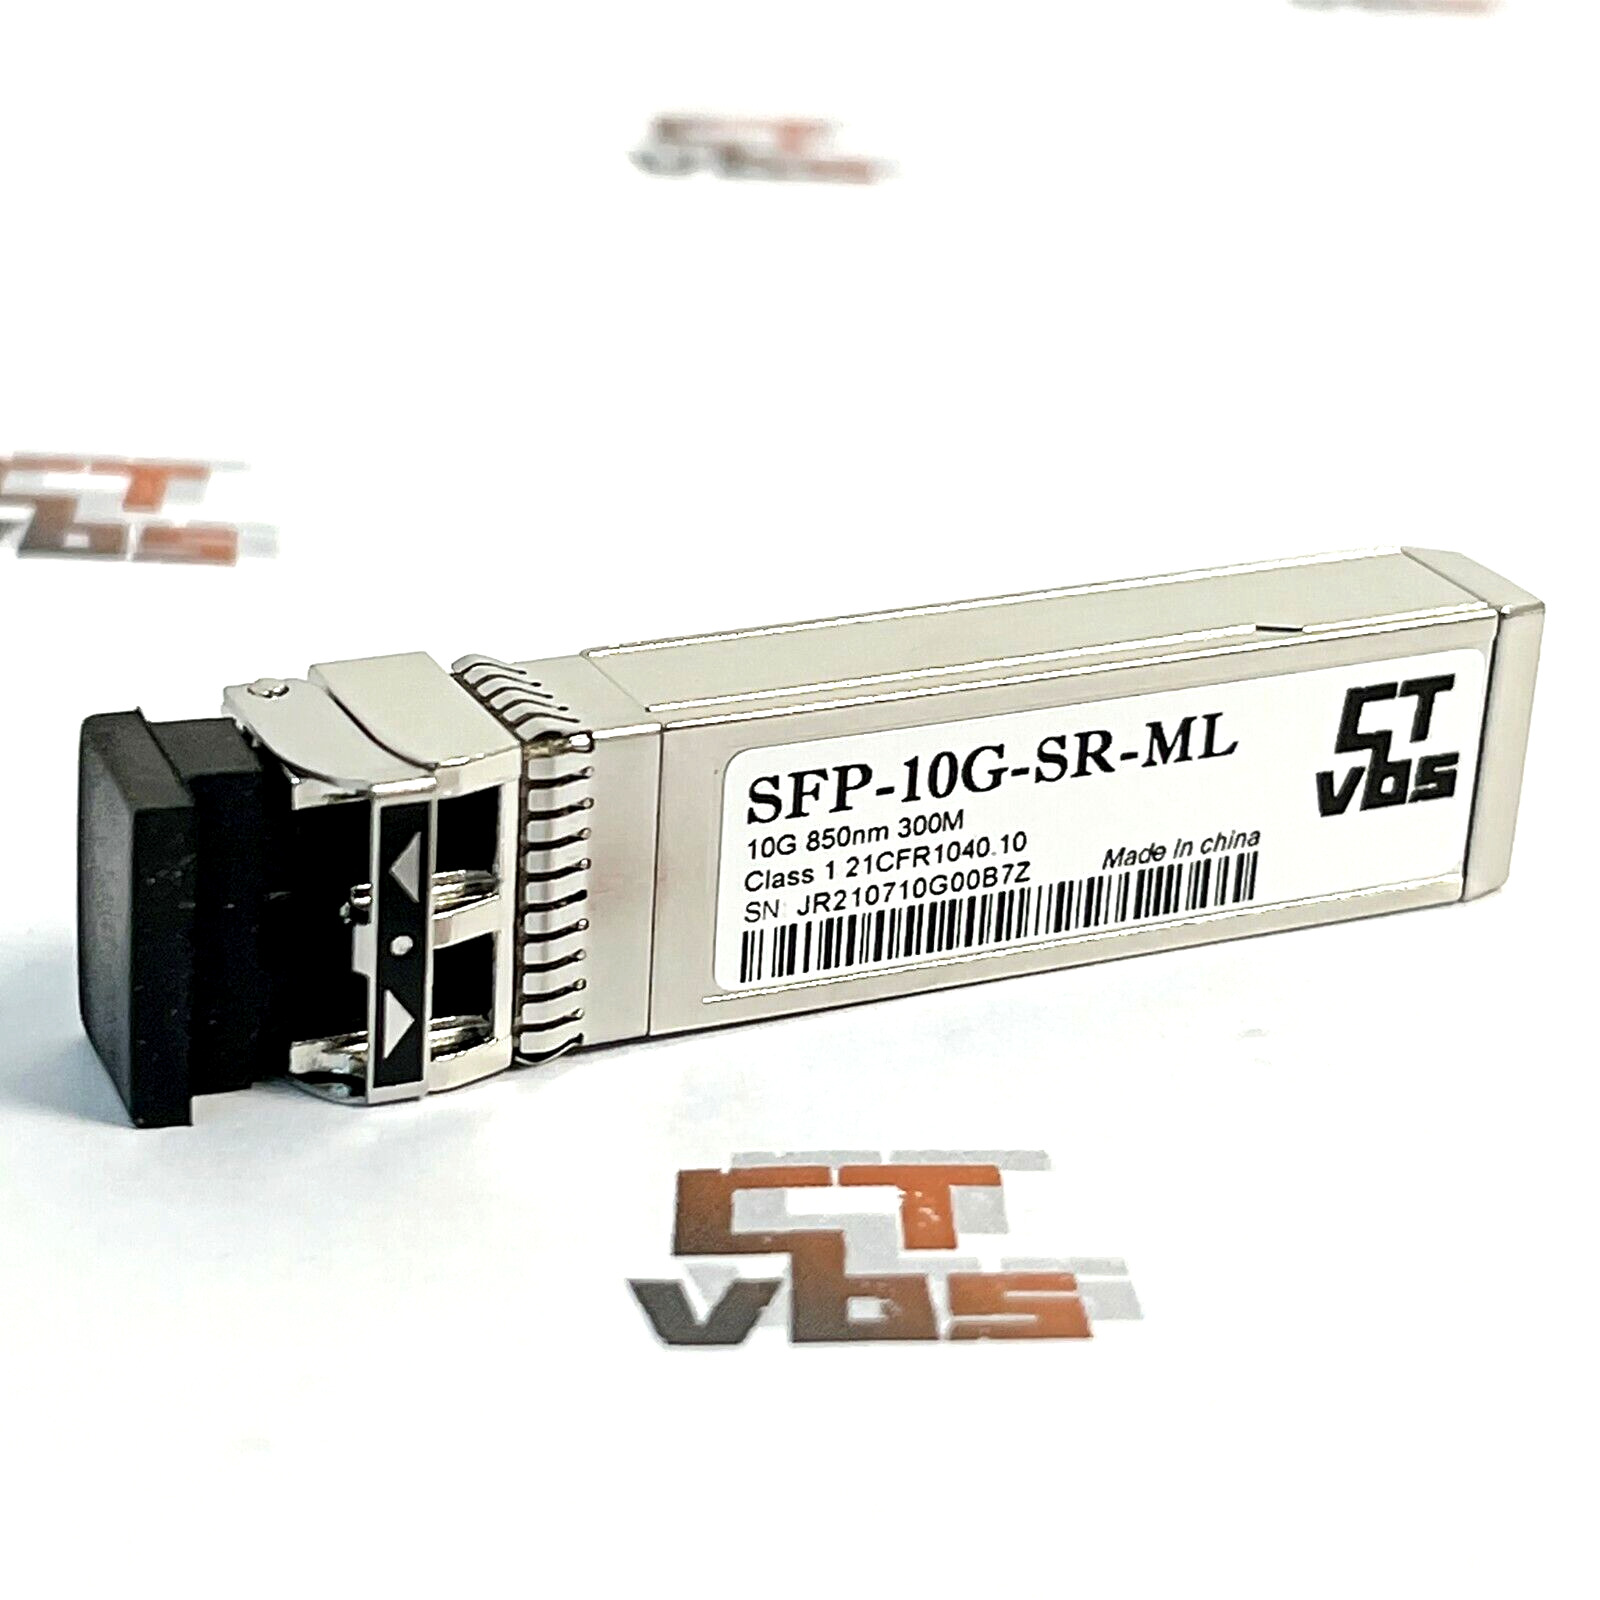 SFP-10G-SR-ML SFP+SR 10Gb/s 850nm Multimode SFP+ Transceiver Mellanox Compatible